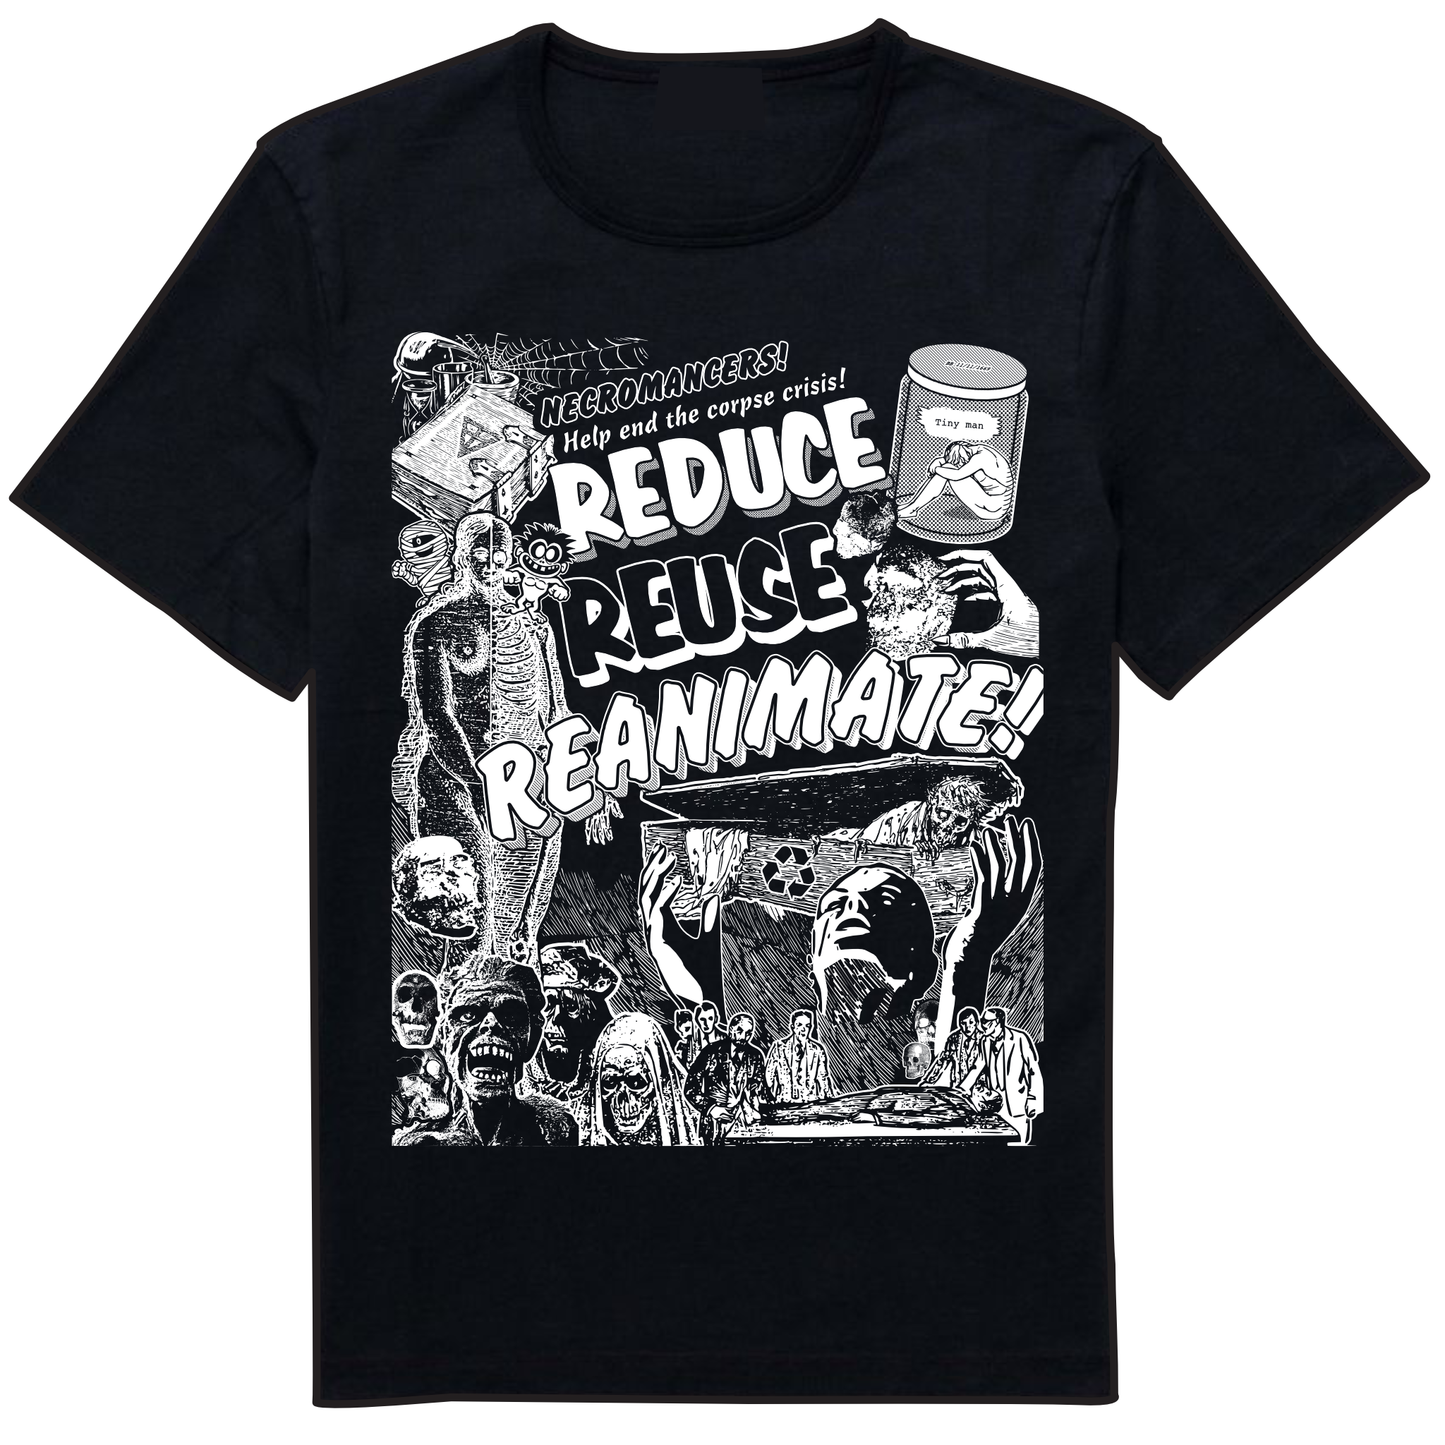 "Reduce, Reuse, Reanimate" T-shirt